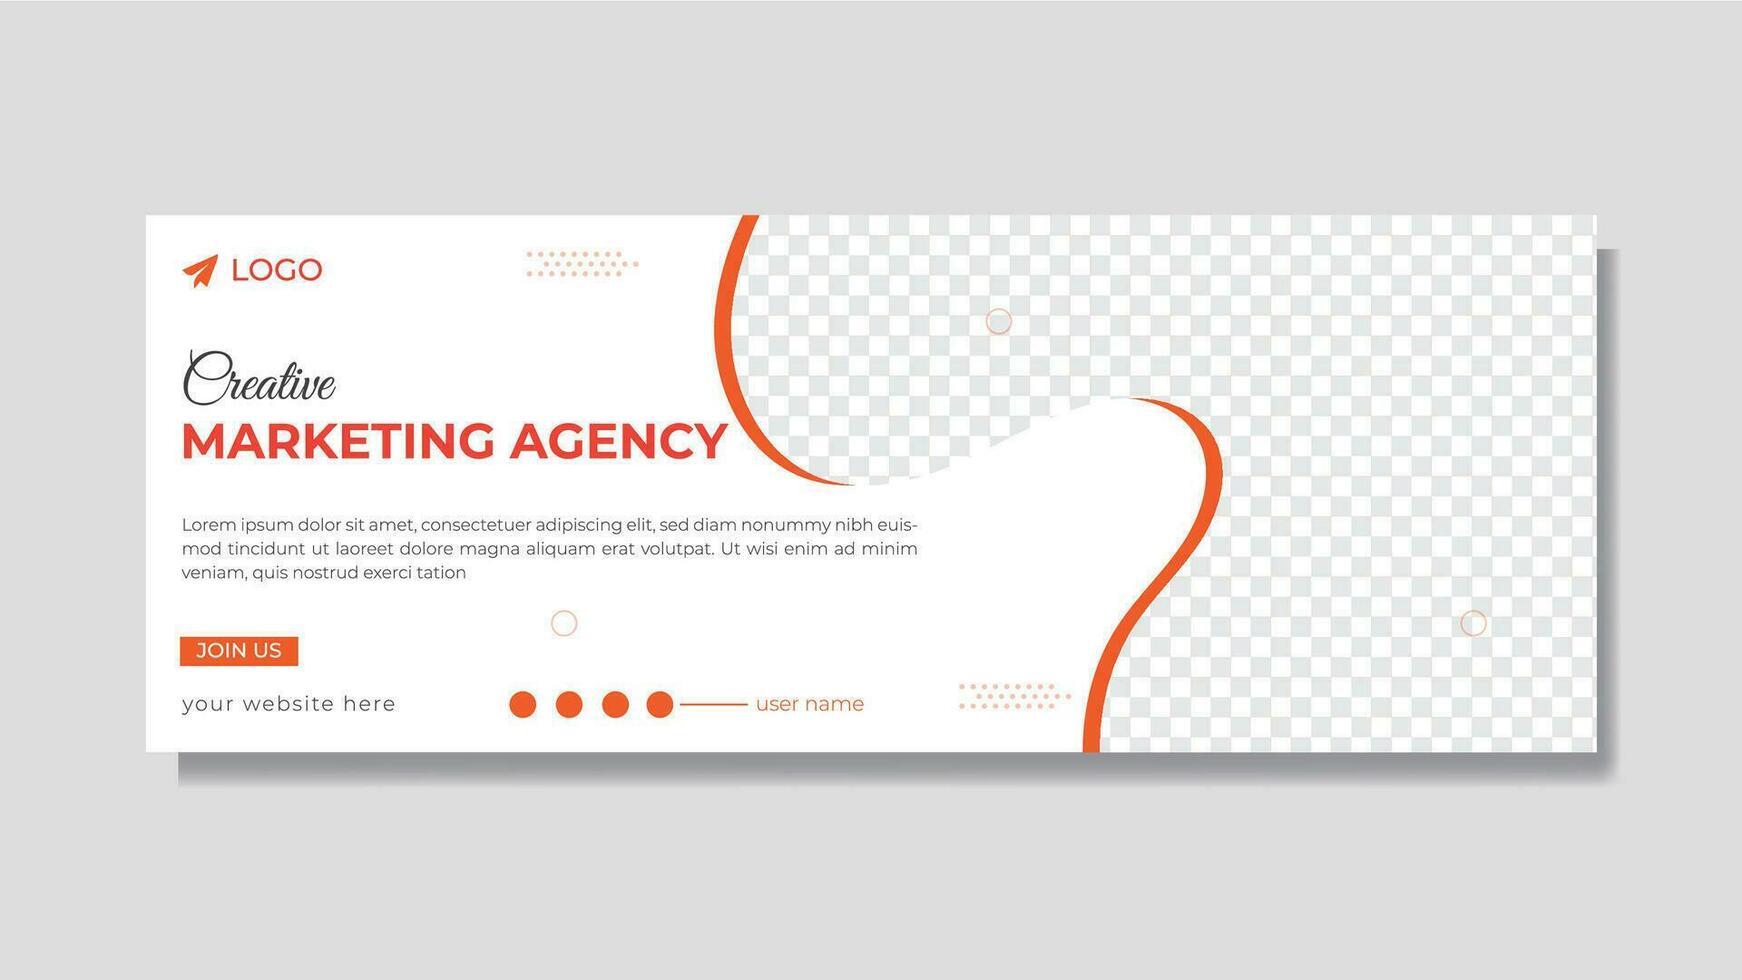 Business timeline cover design and web banner design vector template for digital marketing agency.